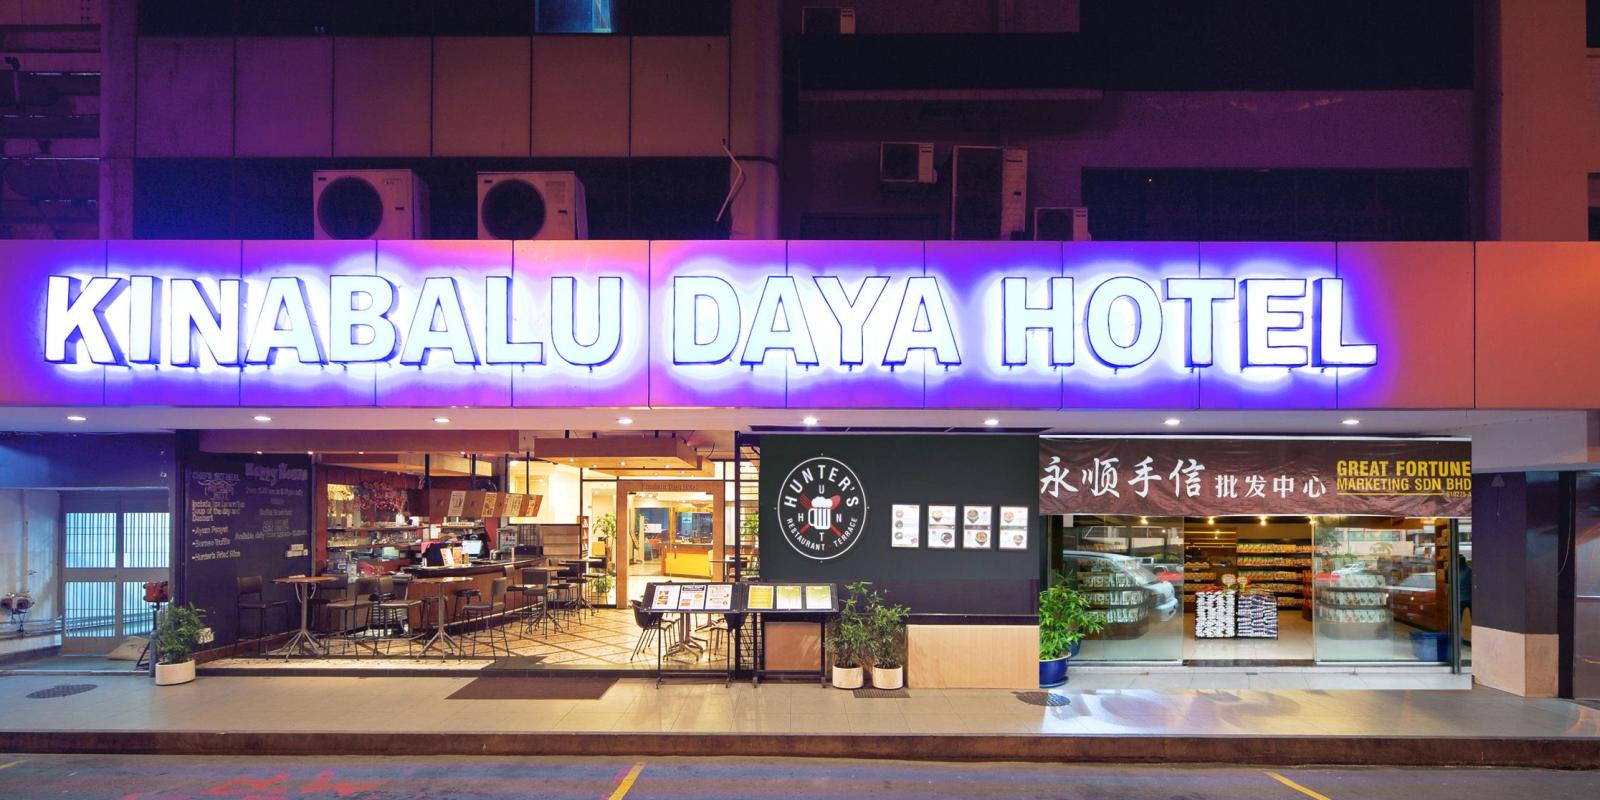 Kinabalu Daya Hotel - STAAH Blog